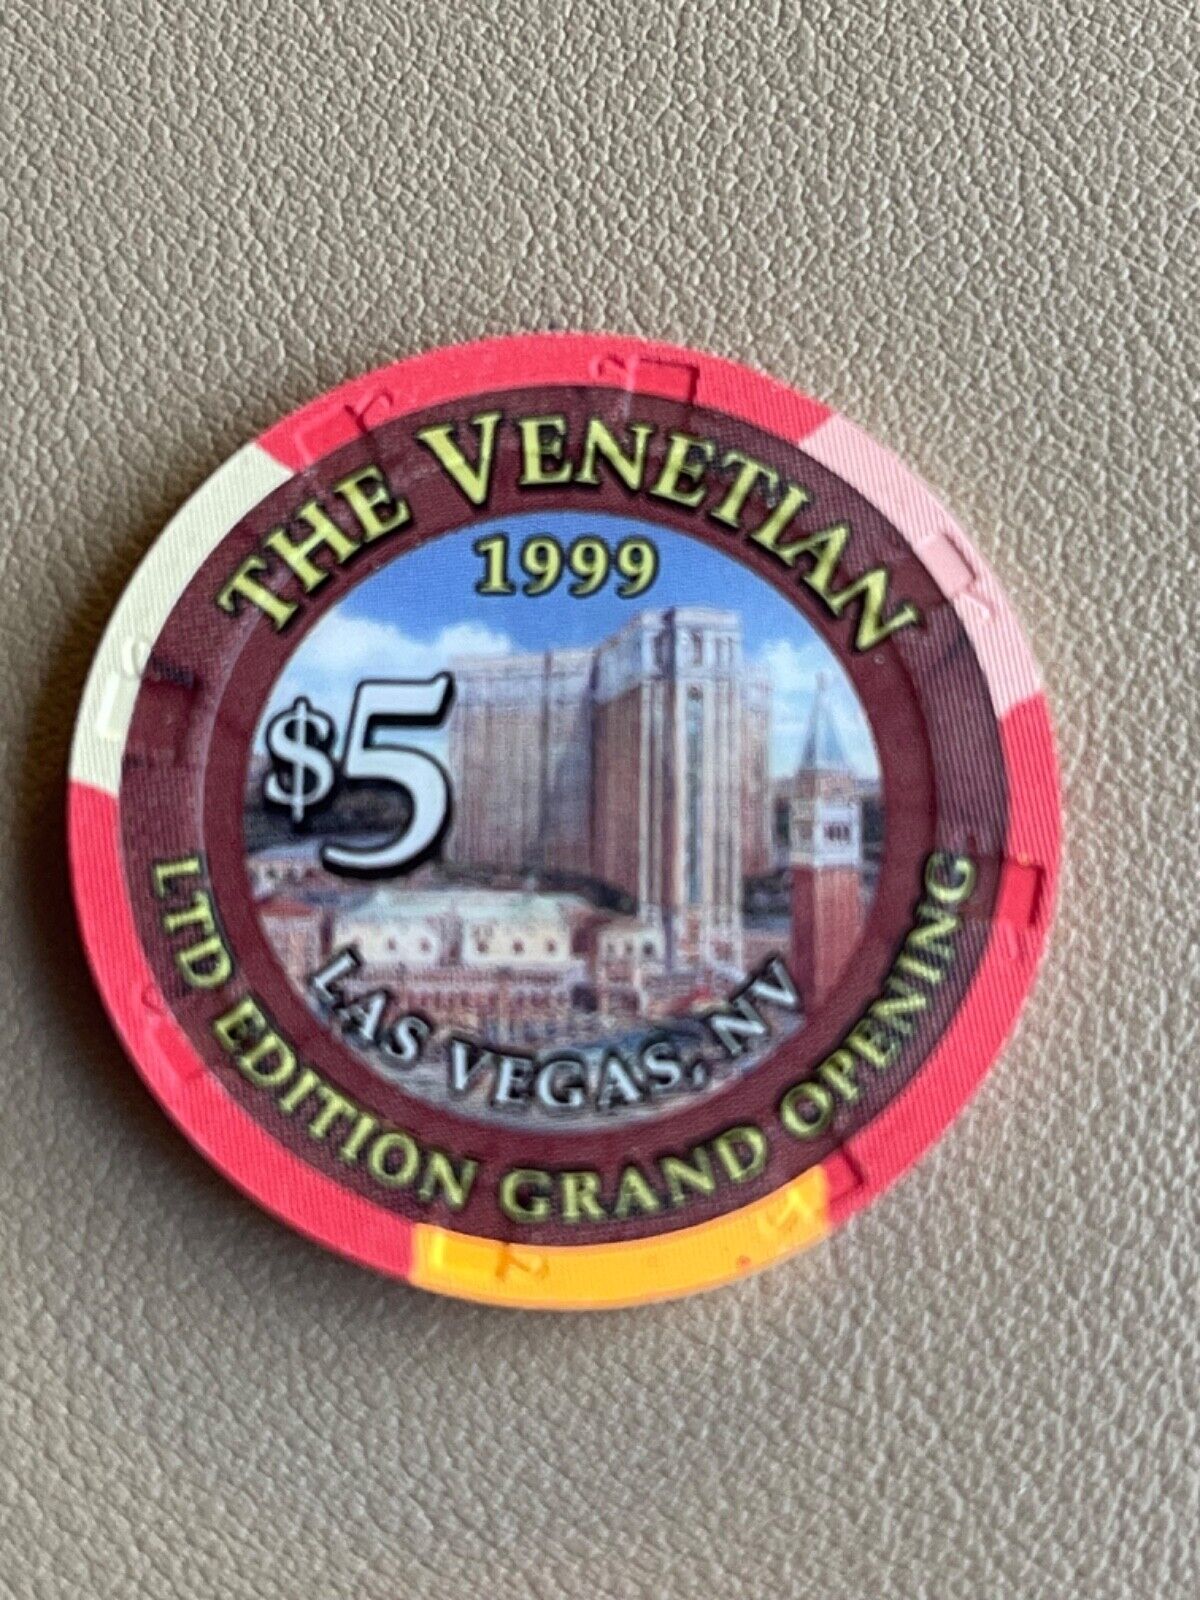 The Venetian Las Vegas 1999 Grand Opening $5 Casino Chip uncirculated